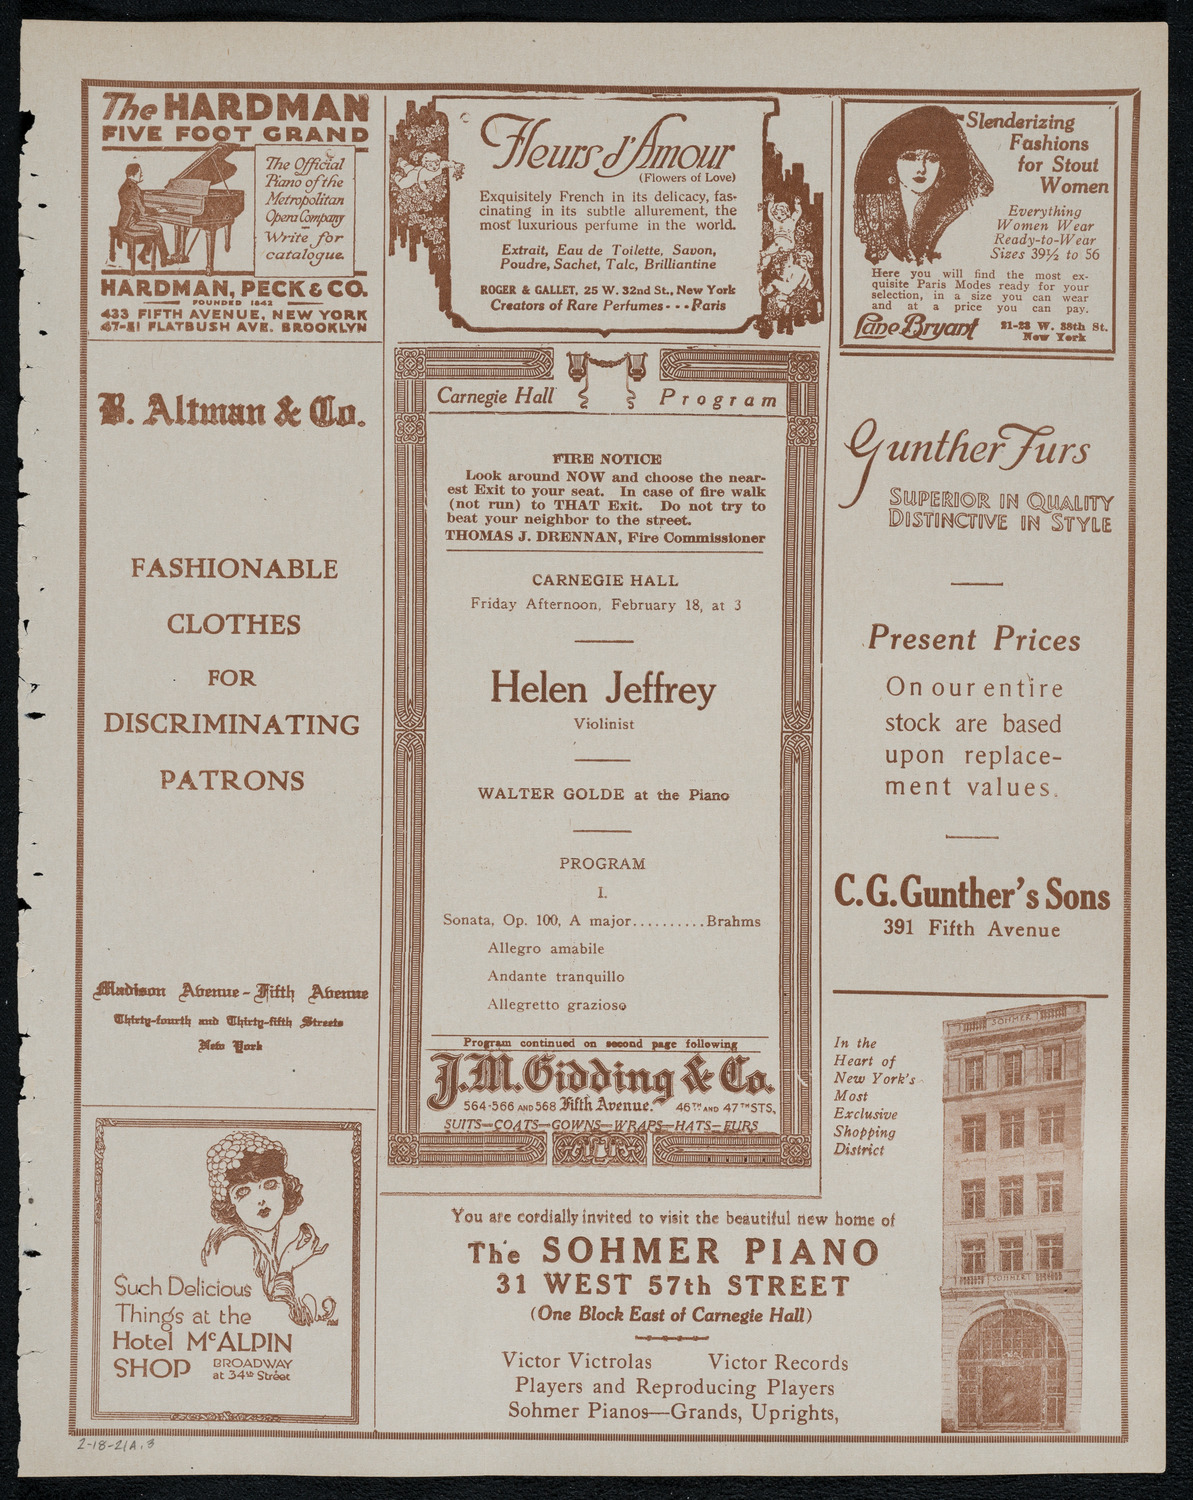 Helen Jeffrey, Violin, February 18, 1921, program page 5